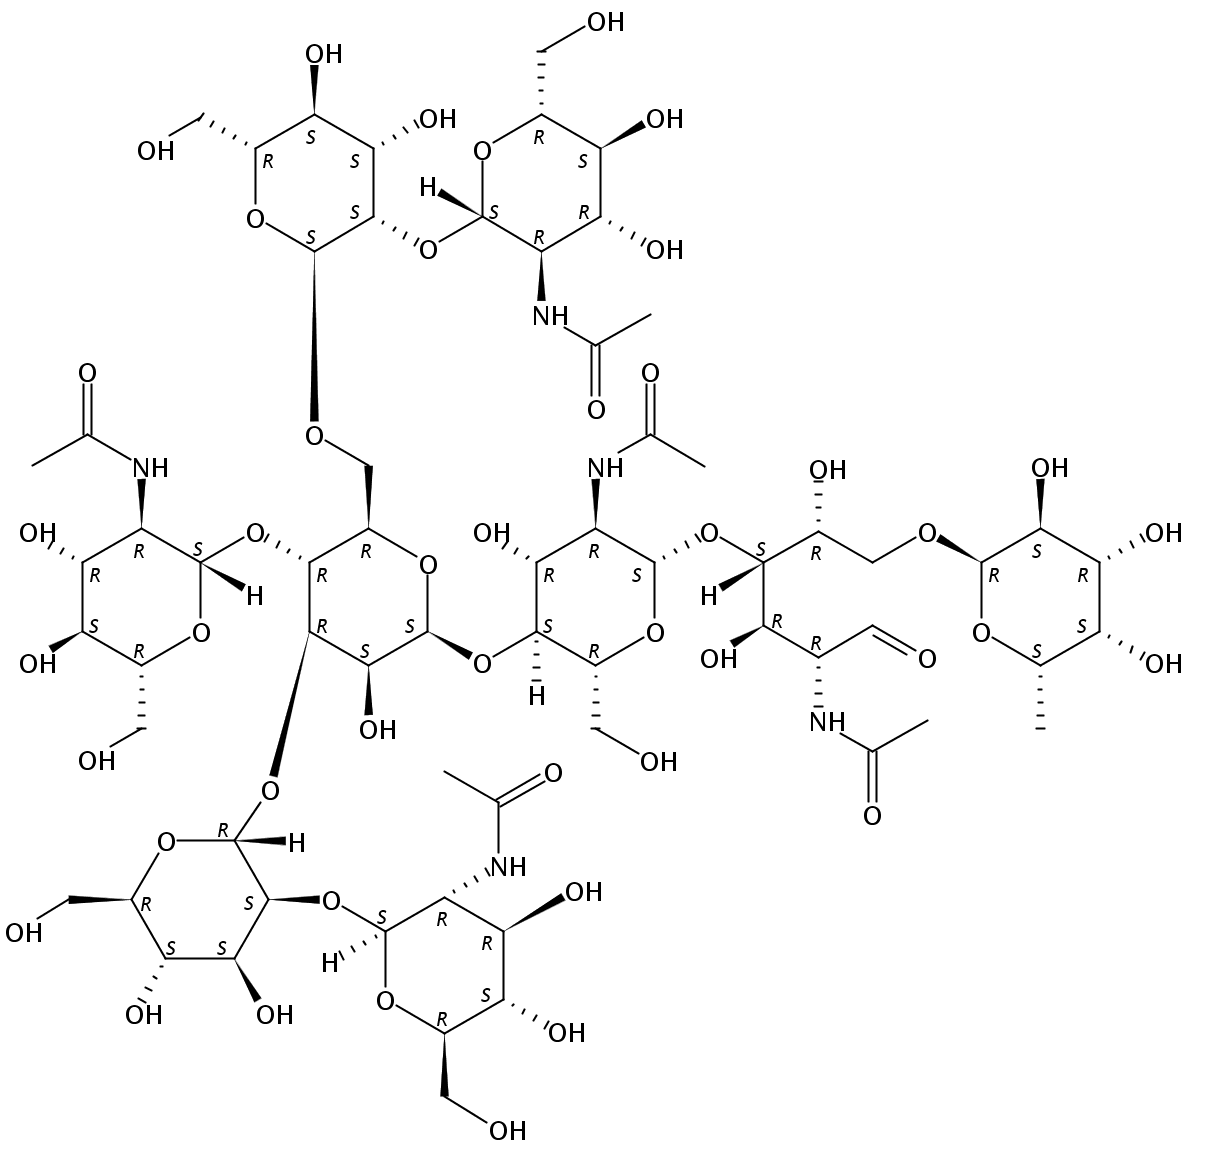 Asialo, agalacto, bisected, biantennary fucosylated (NGA2FB)